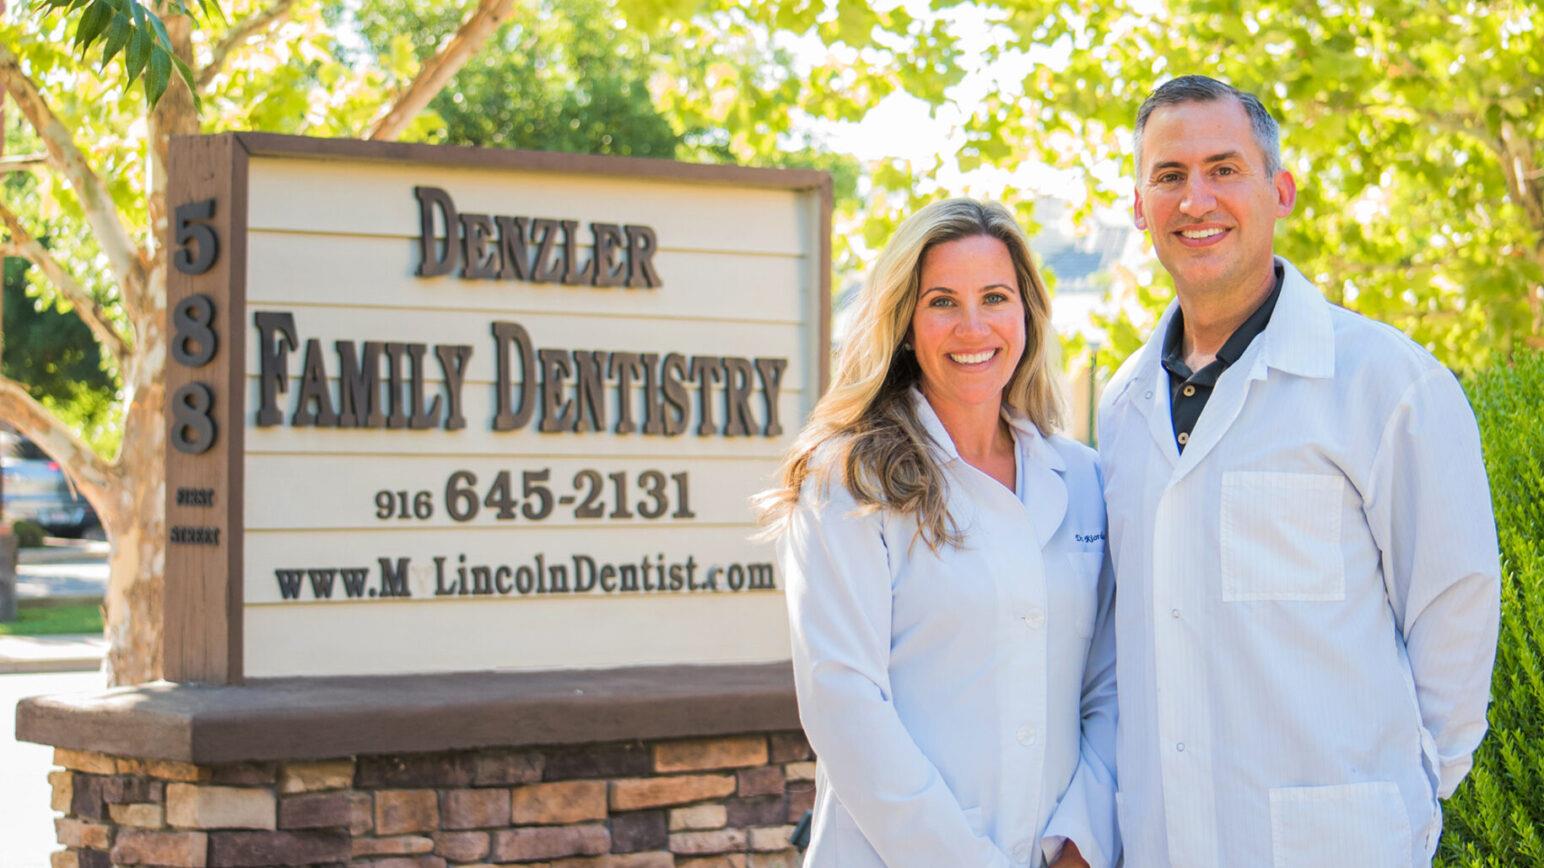 Denzler Family Dentistry/Dentists                                                                                                                                                                                                